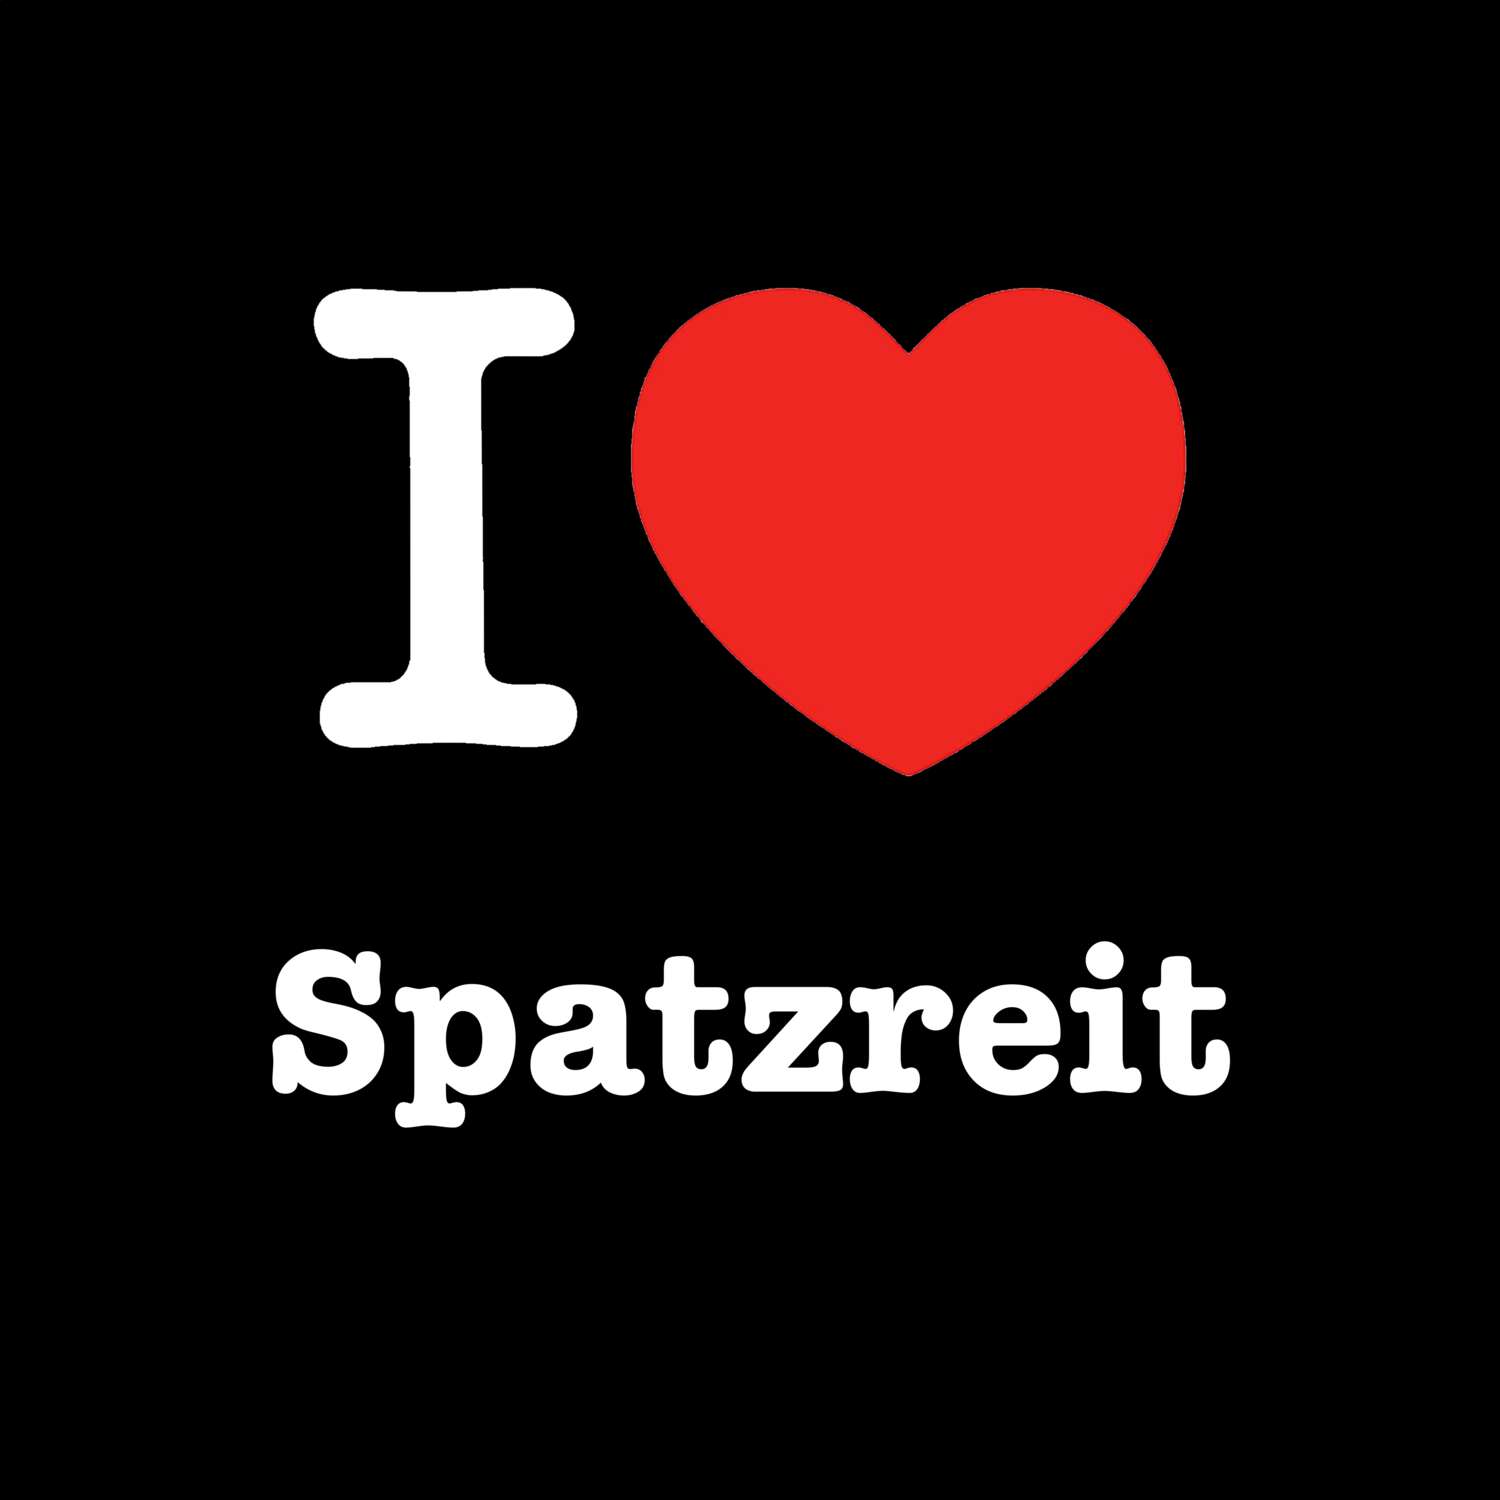 Spatzreit T-Shirt »I love«